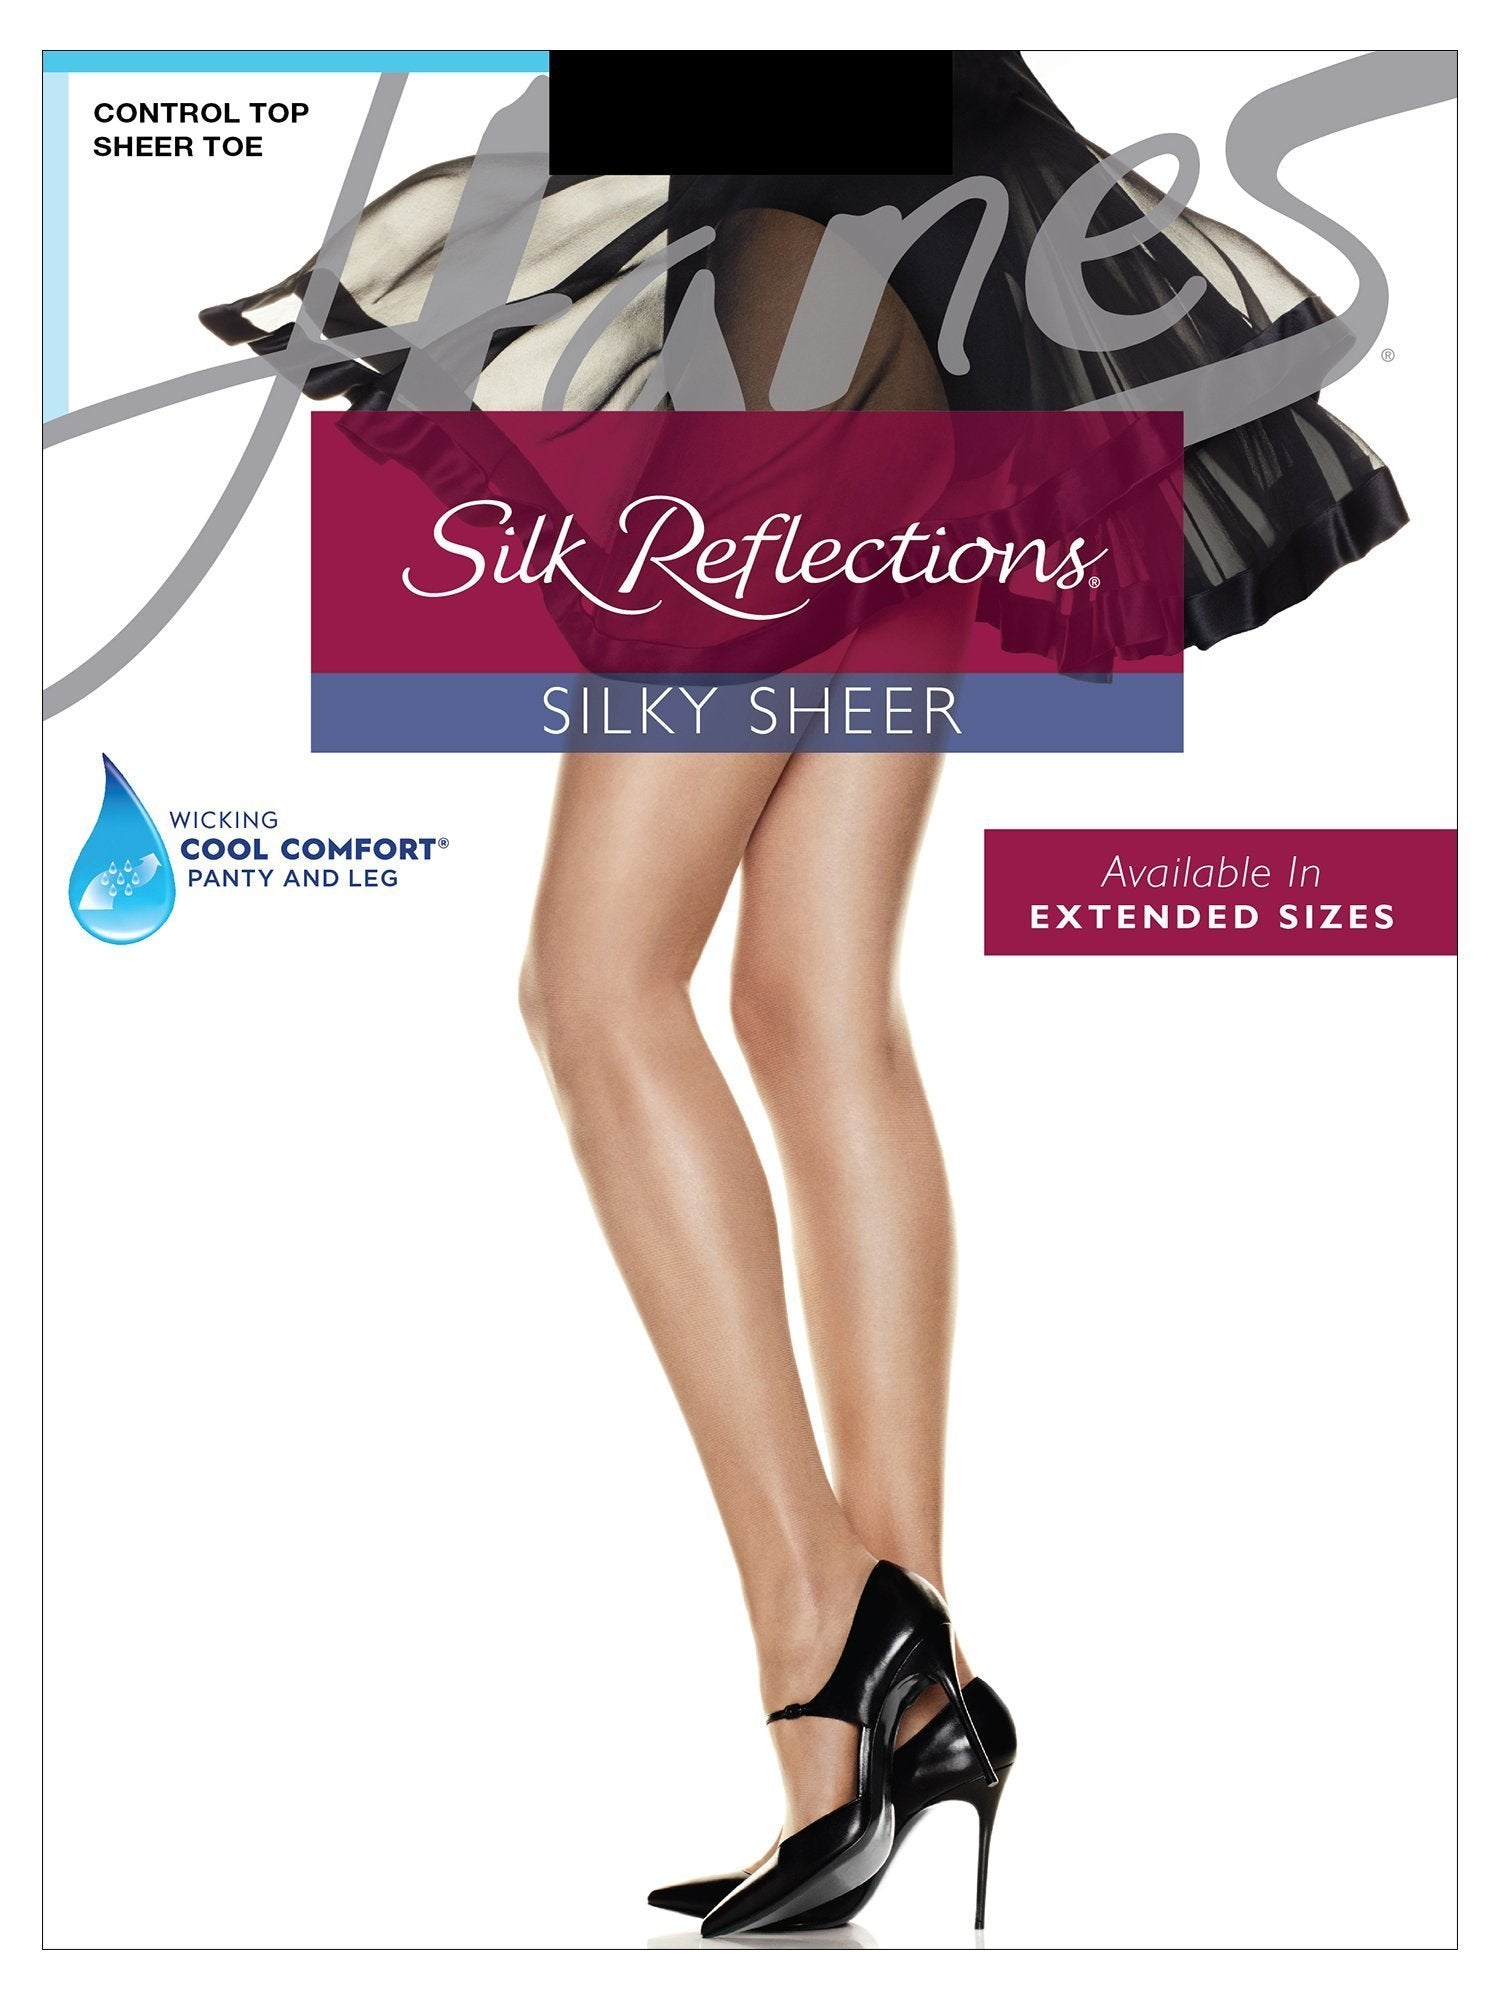 Shapermint Hanes Hosiery Hanes® Silk Reflections Silky Sheer Control Top-Sheer Toe Hosiery